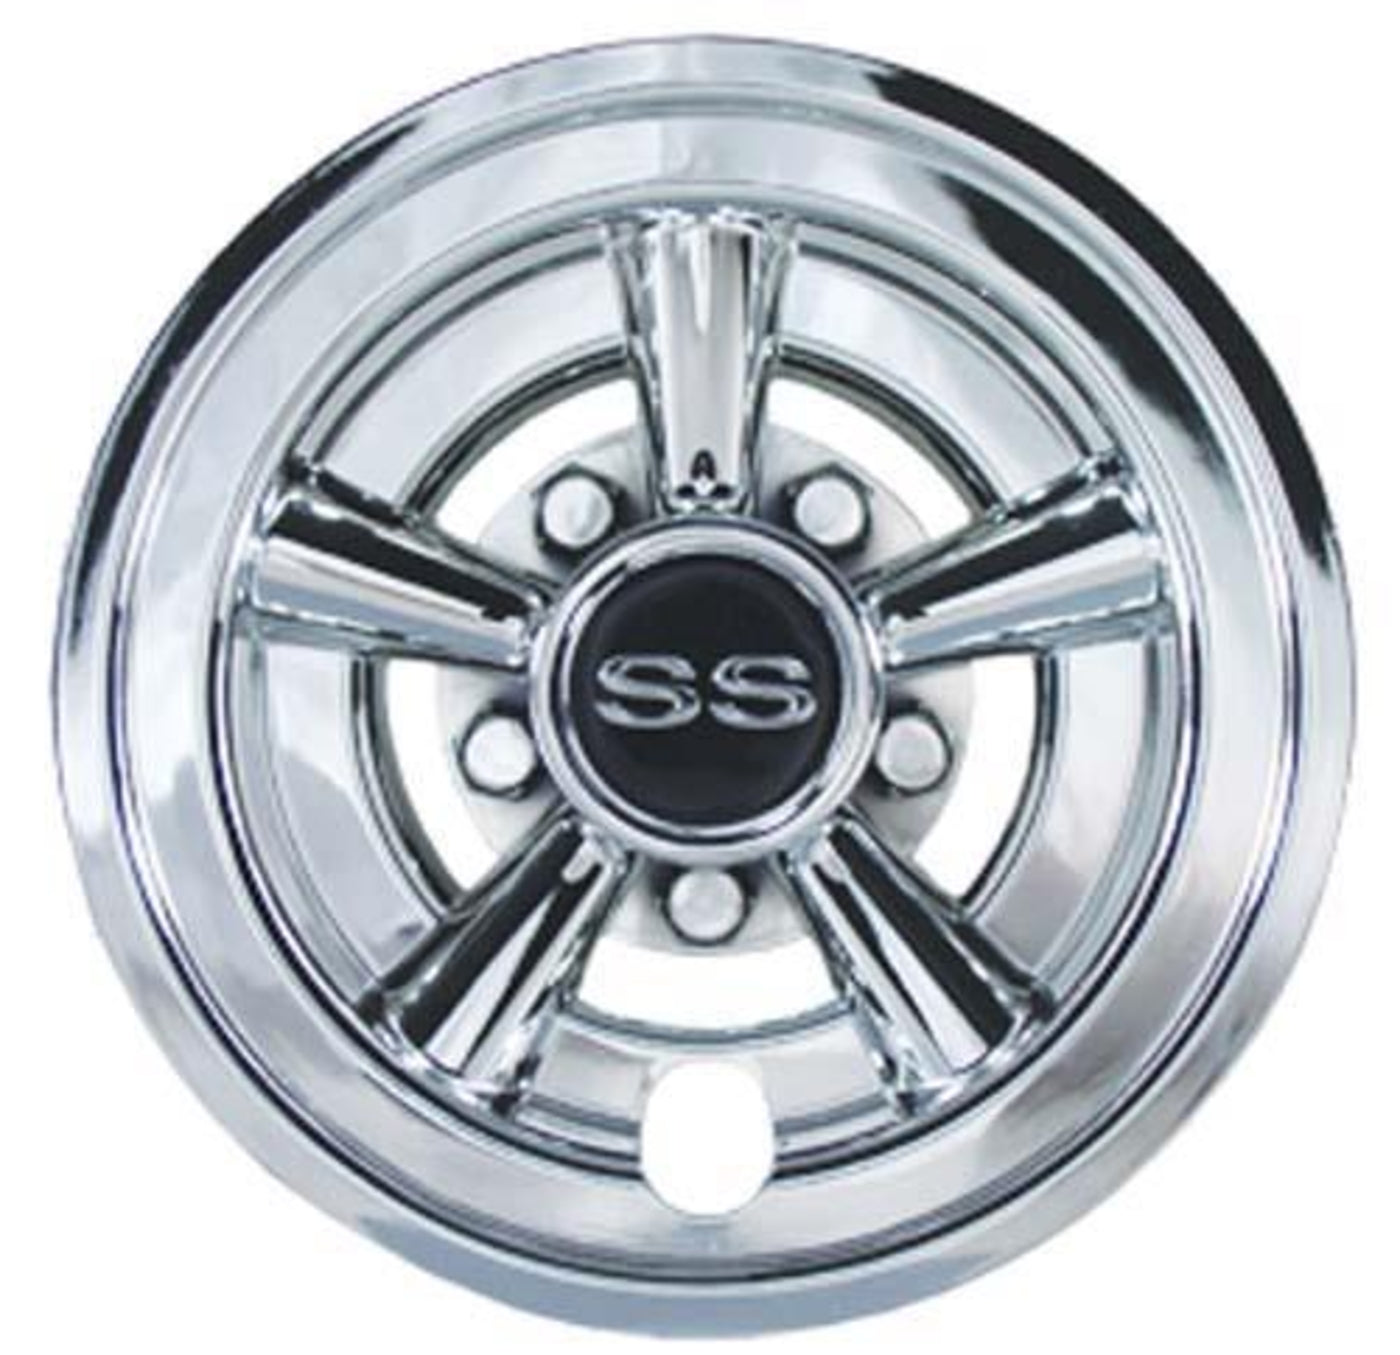 8" Chrome "SS" Wheel Cover